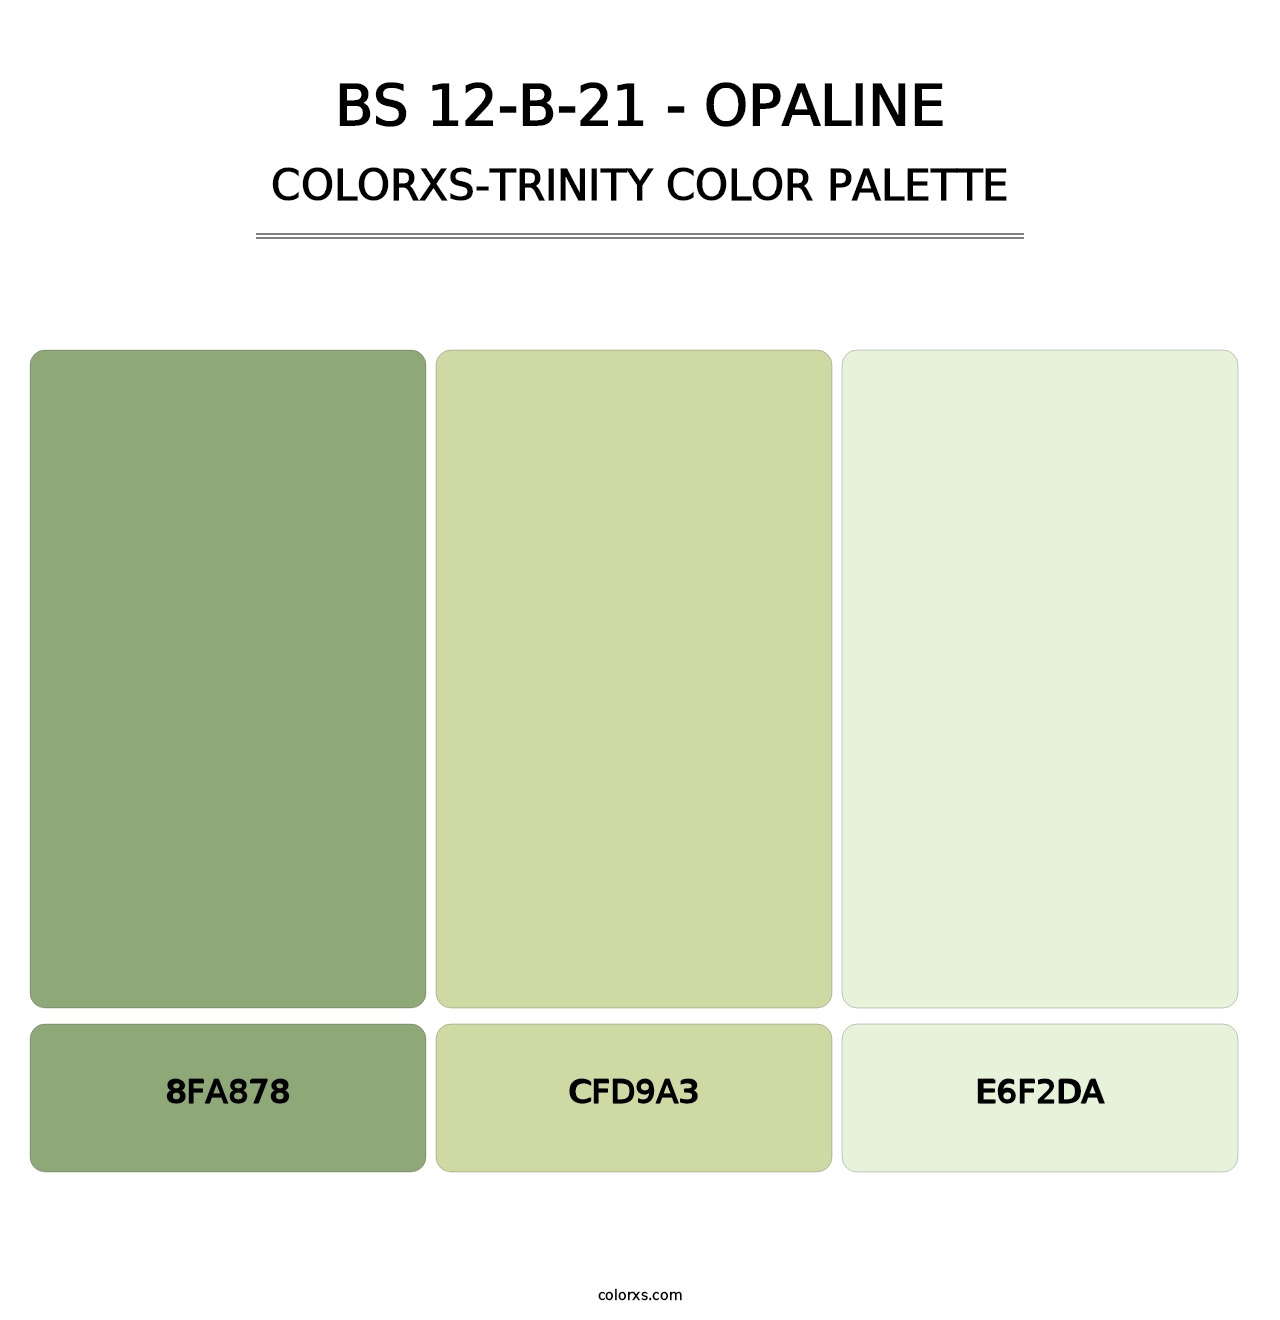 BS 12-B-21 - Opaline - Colorxs Trinity Palette